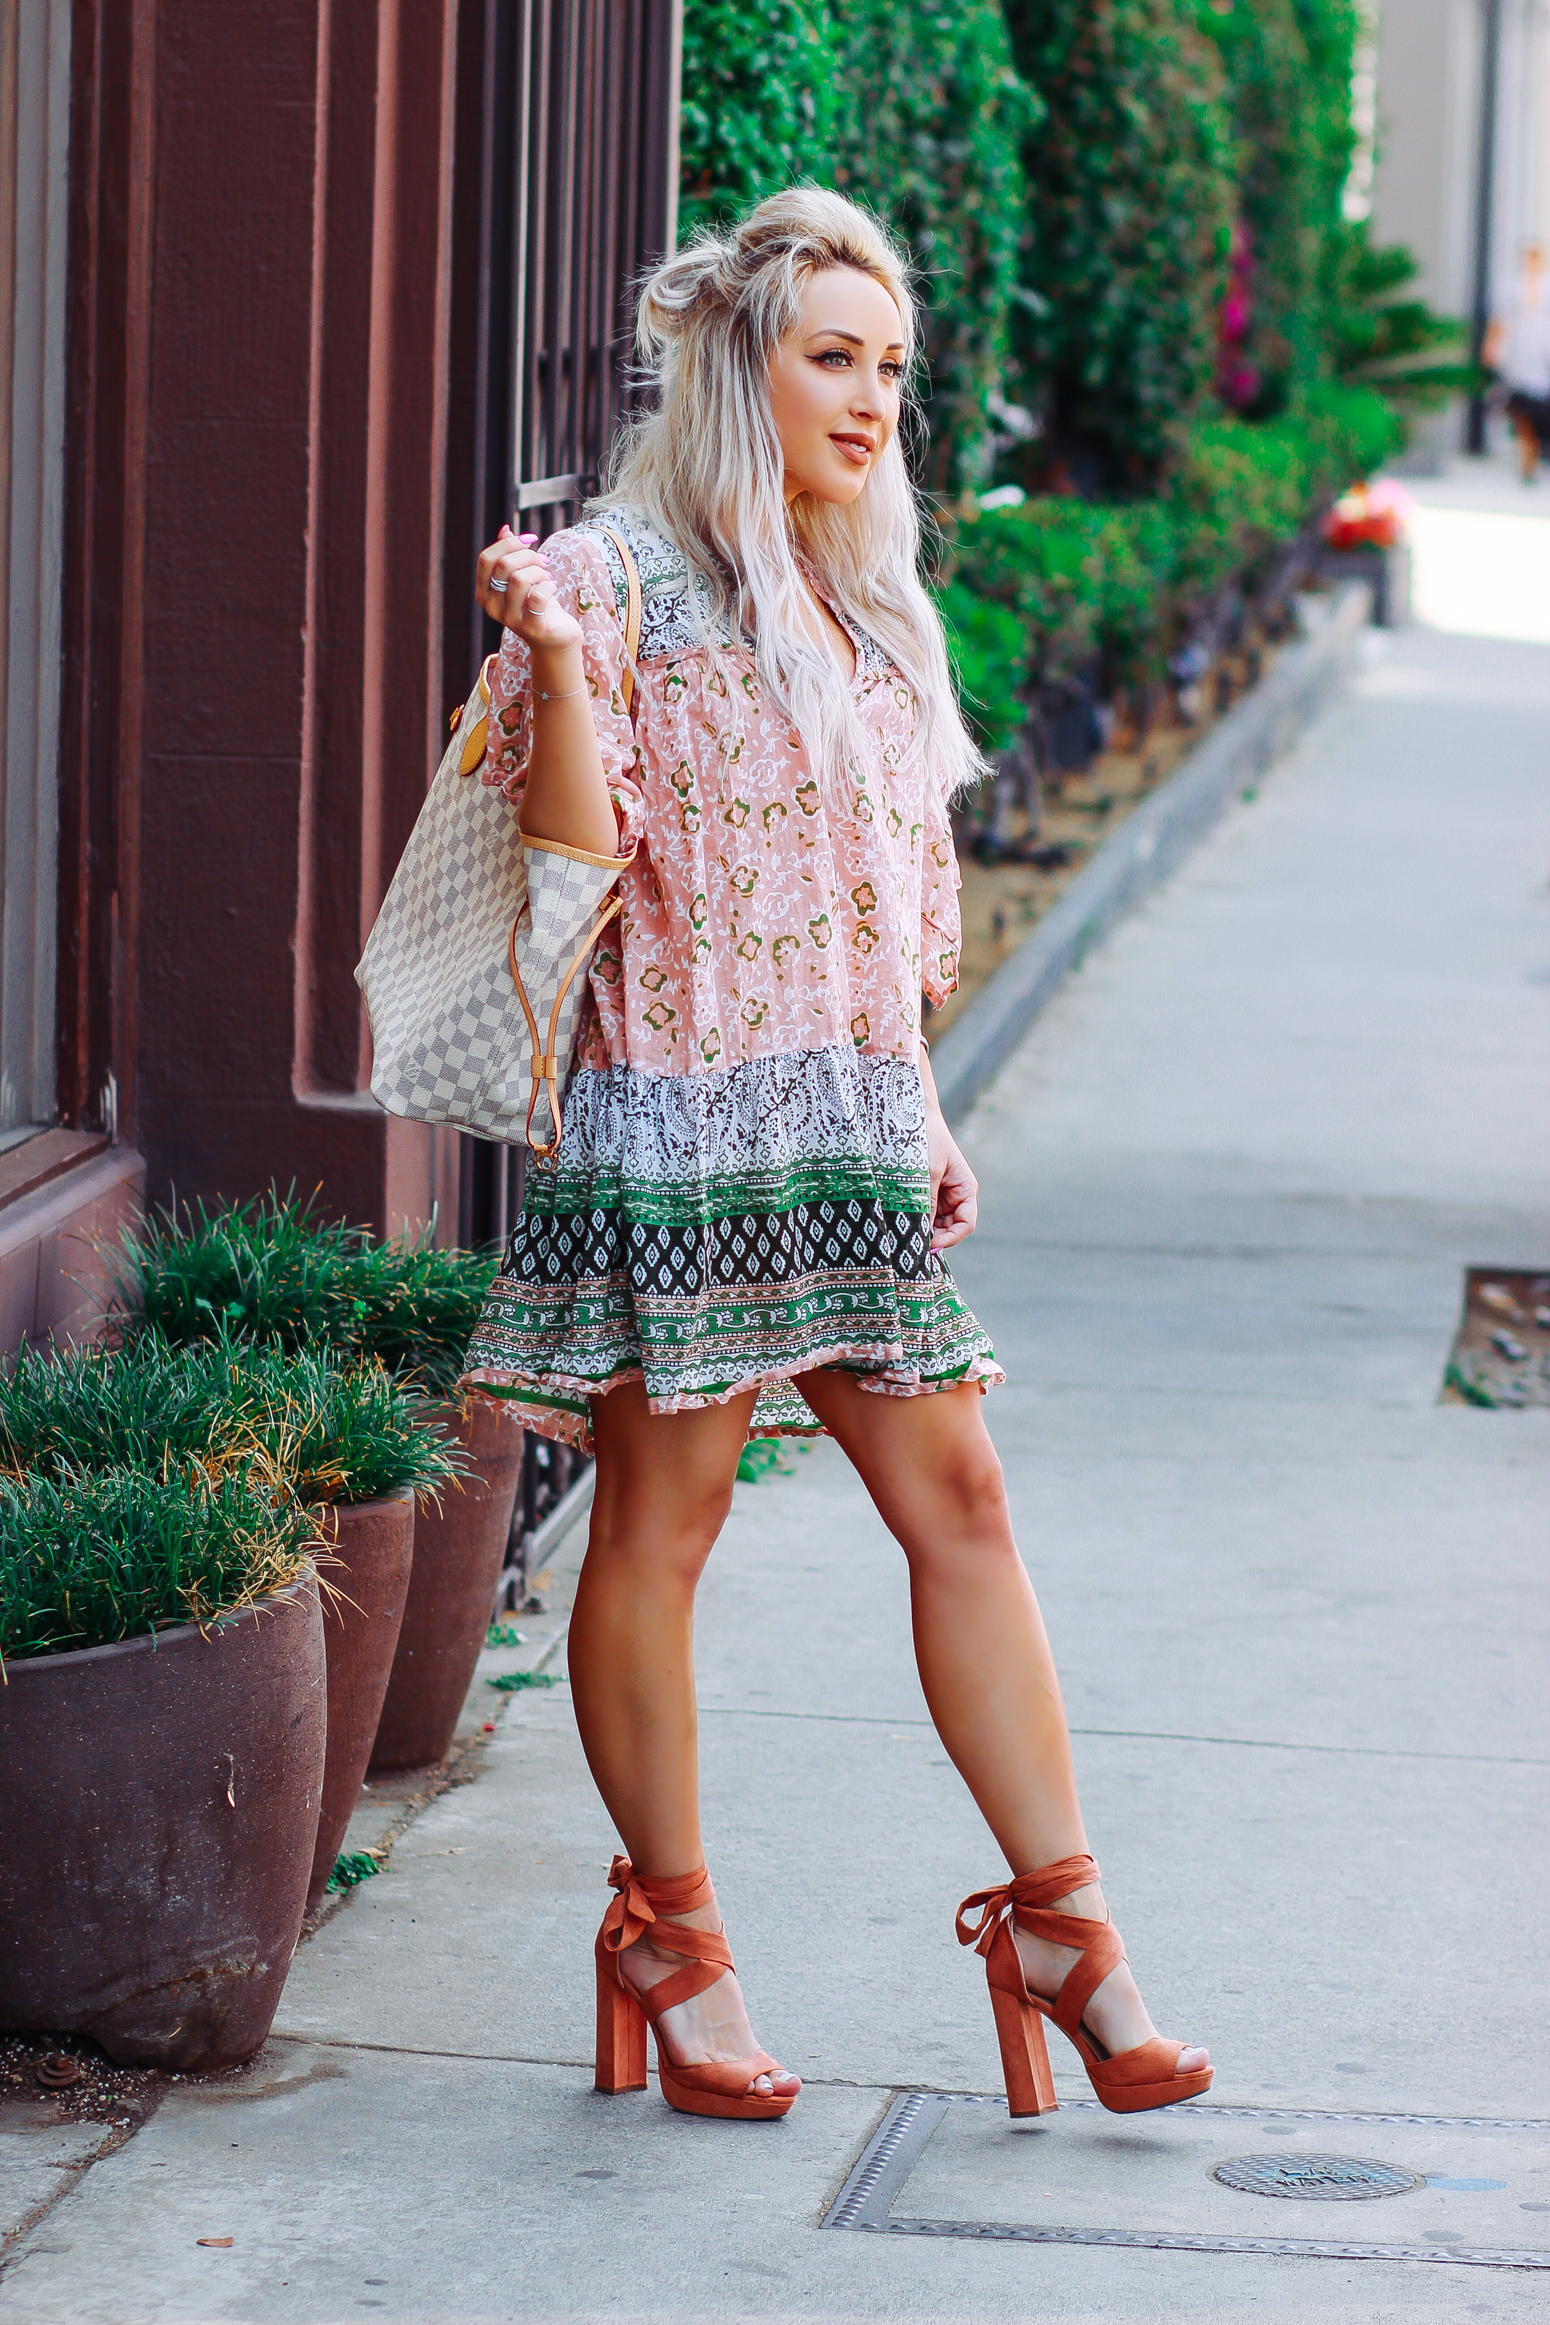 Blondie in the City | Boho Style Dress @LavishGOLD